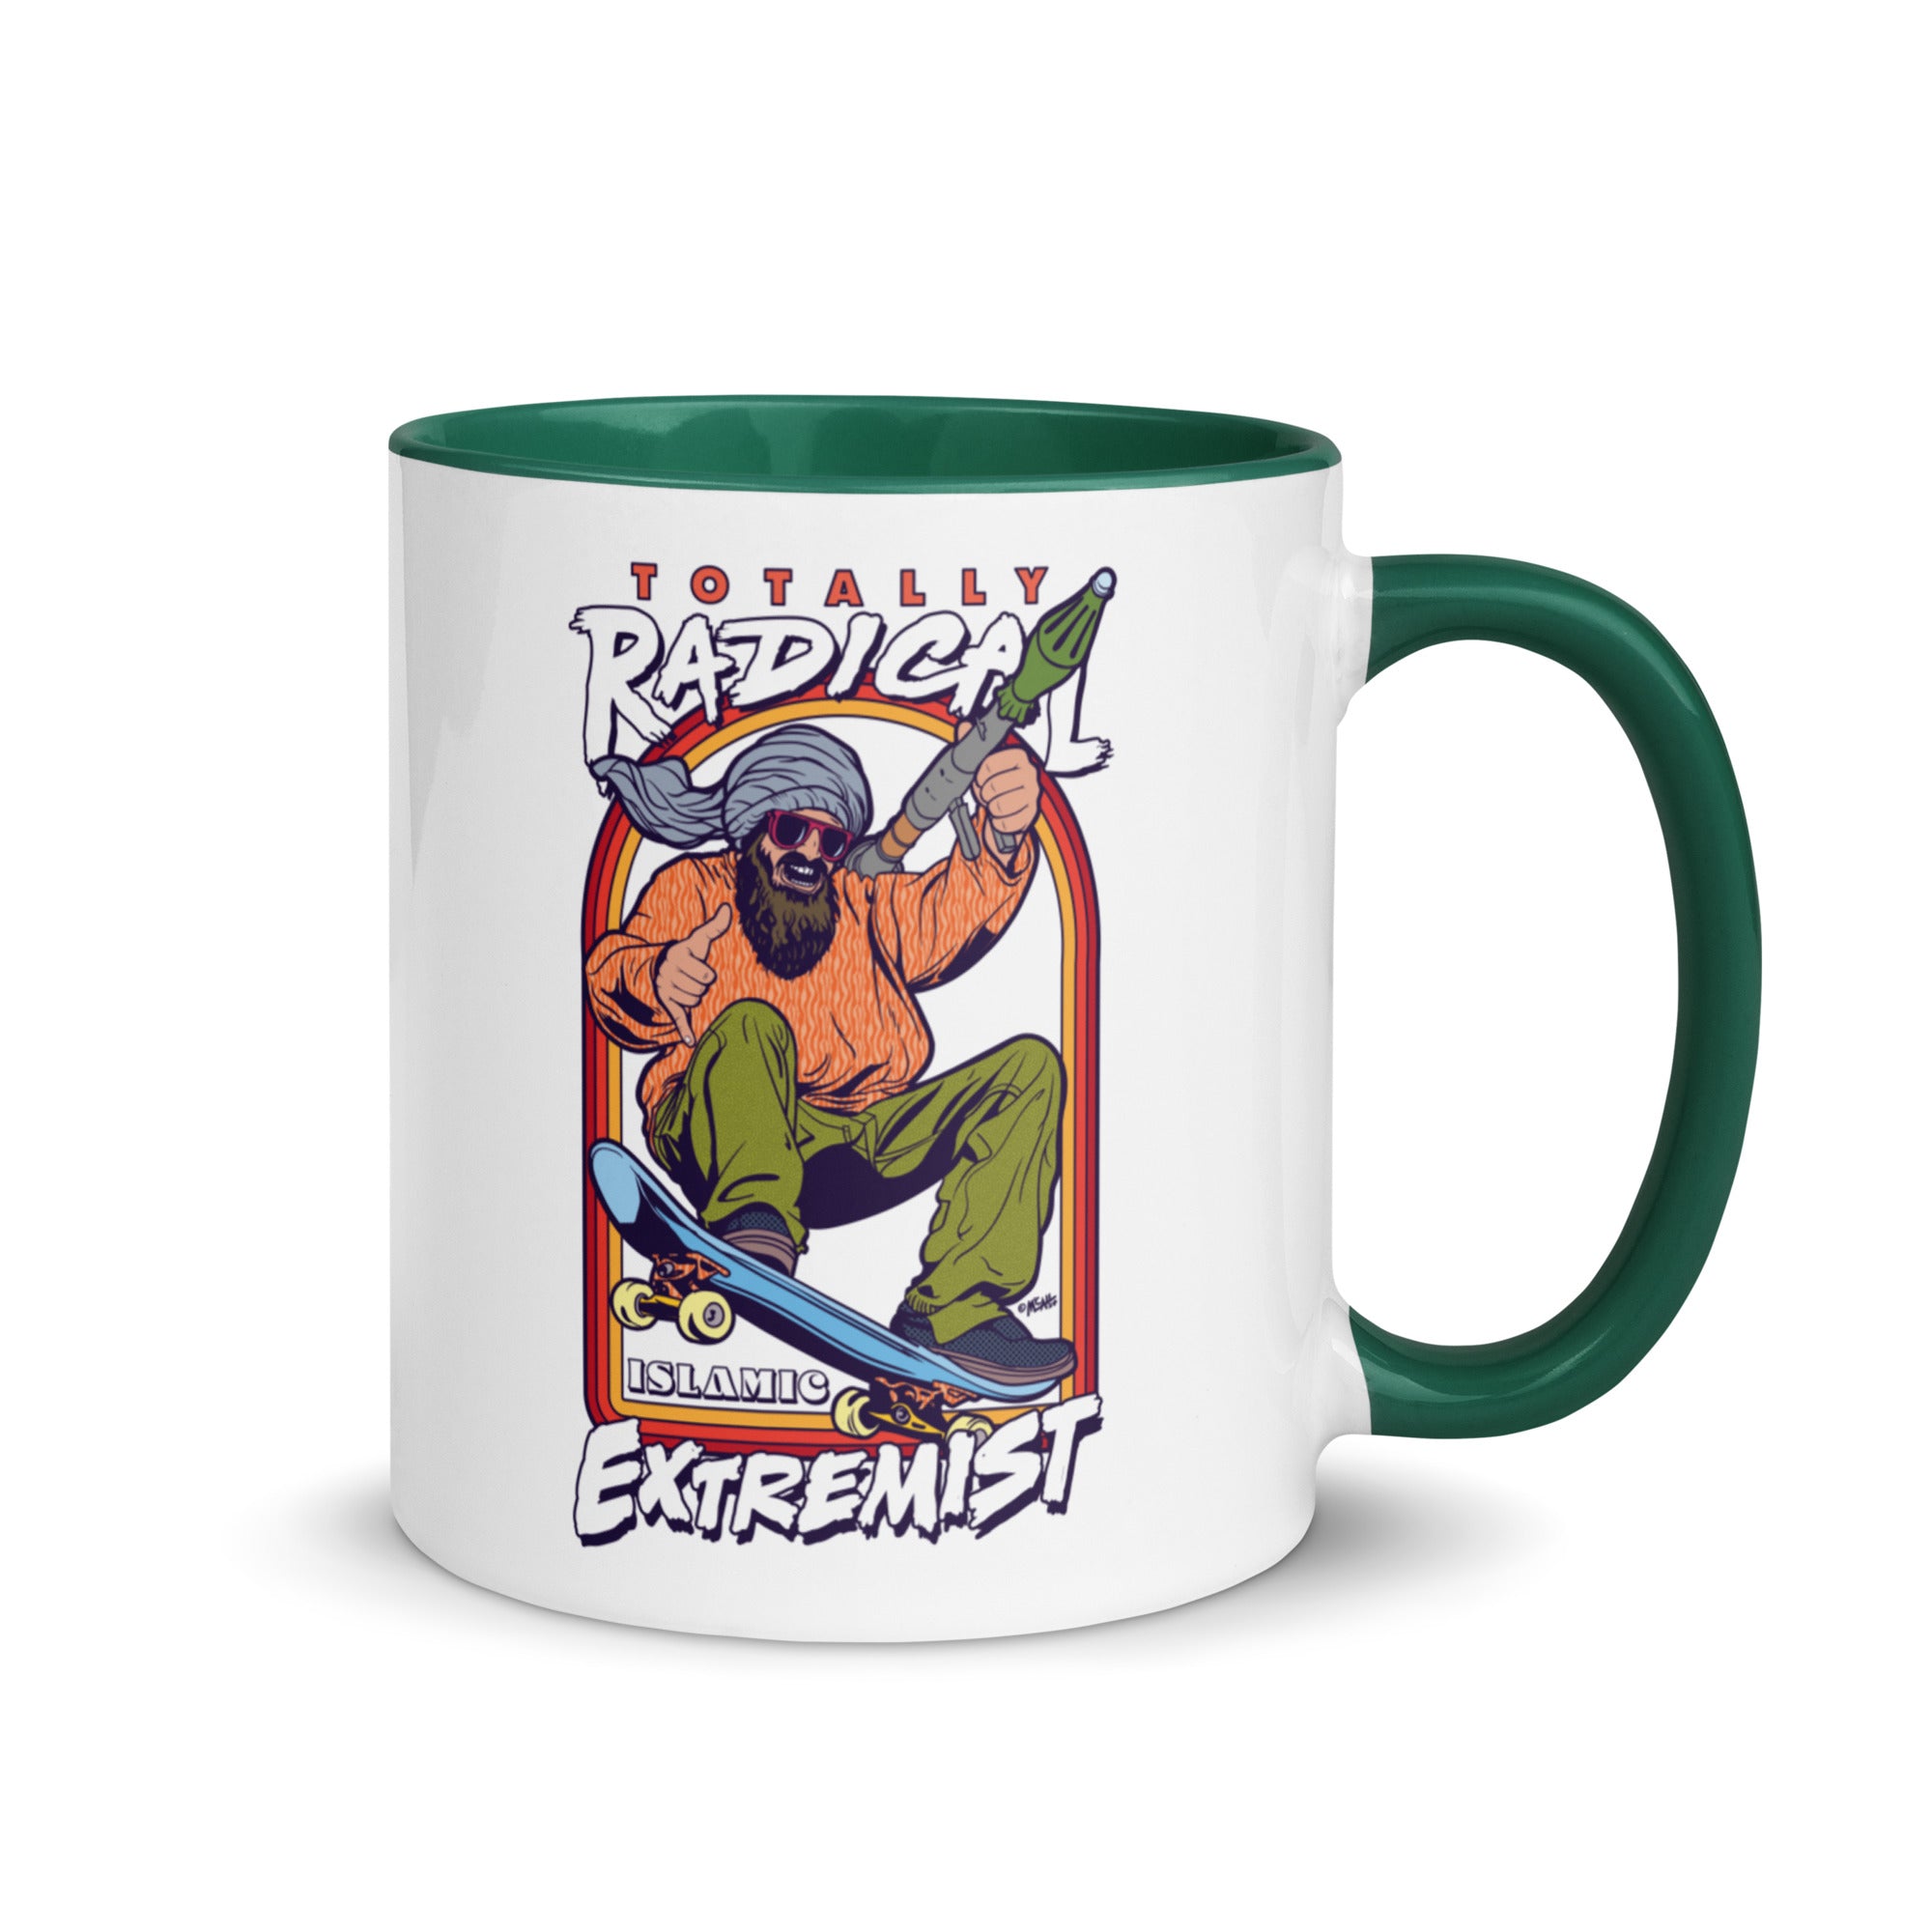 Totally Radical Islamic Extremist Coffee Mug